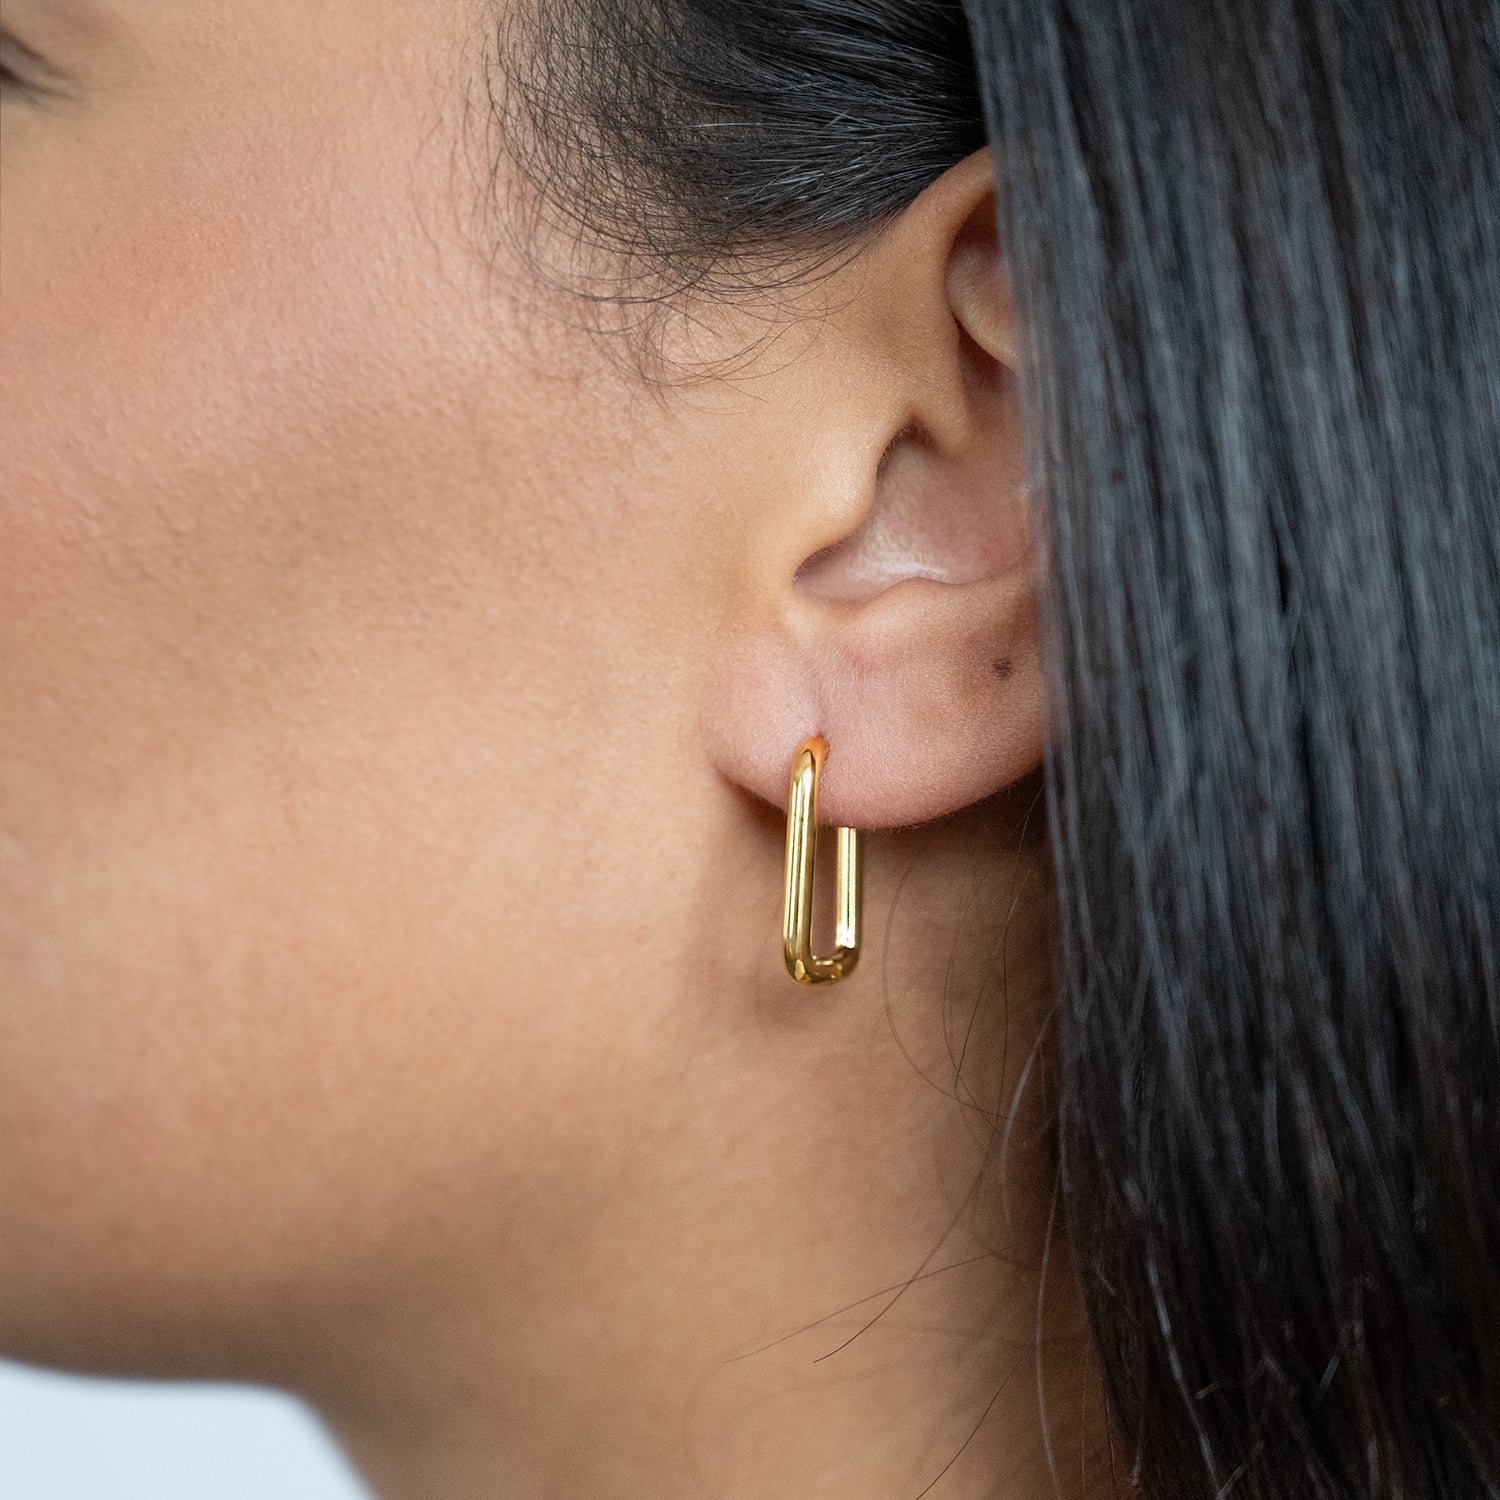 Rectangular Hoop Earrings Non Tarnish shown worn in a model's ear